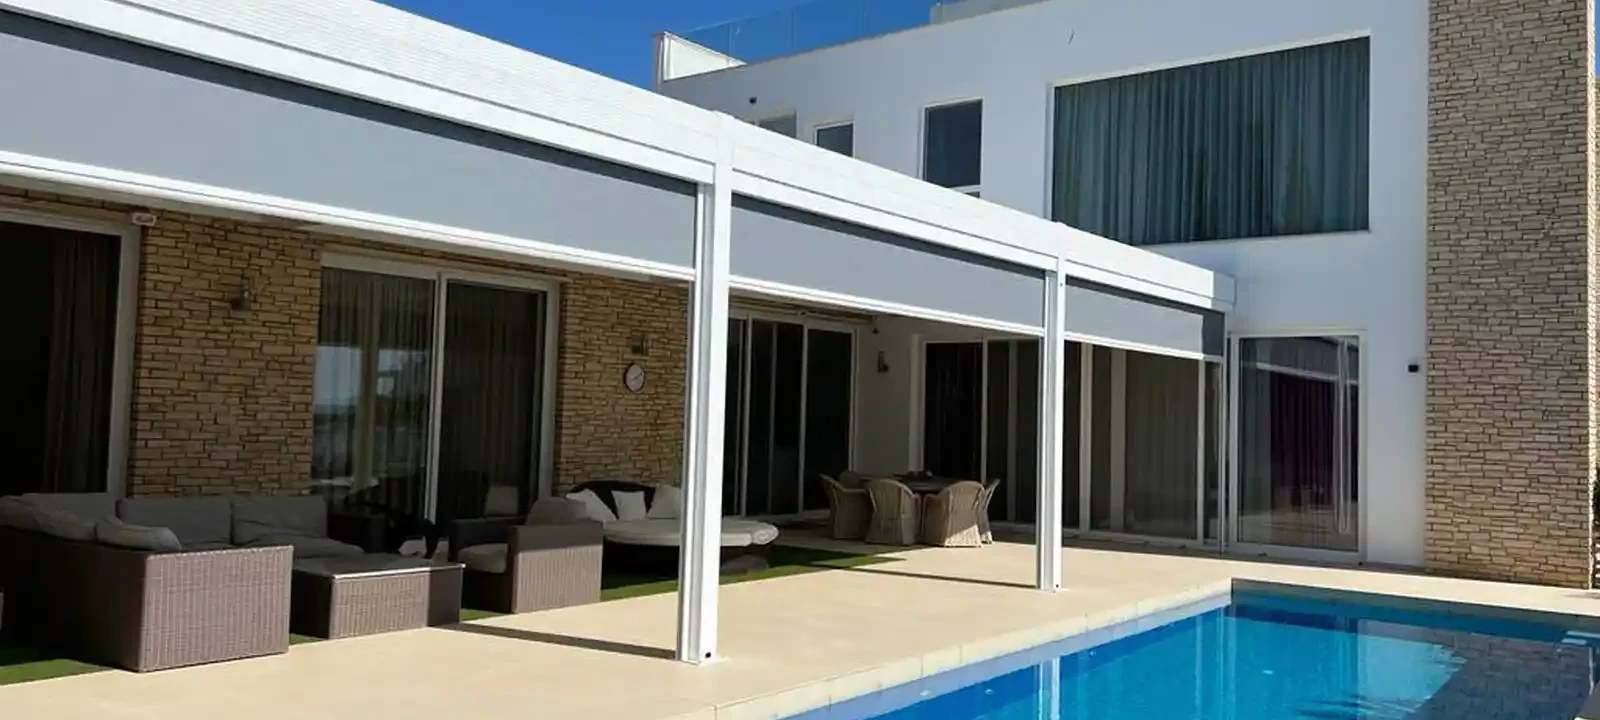 4-bedroom villa fоr sаle €4.000.000, image 1